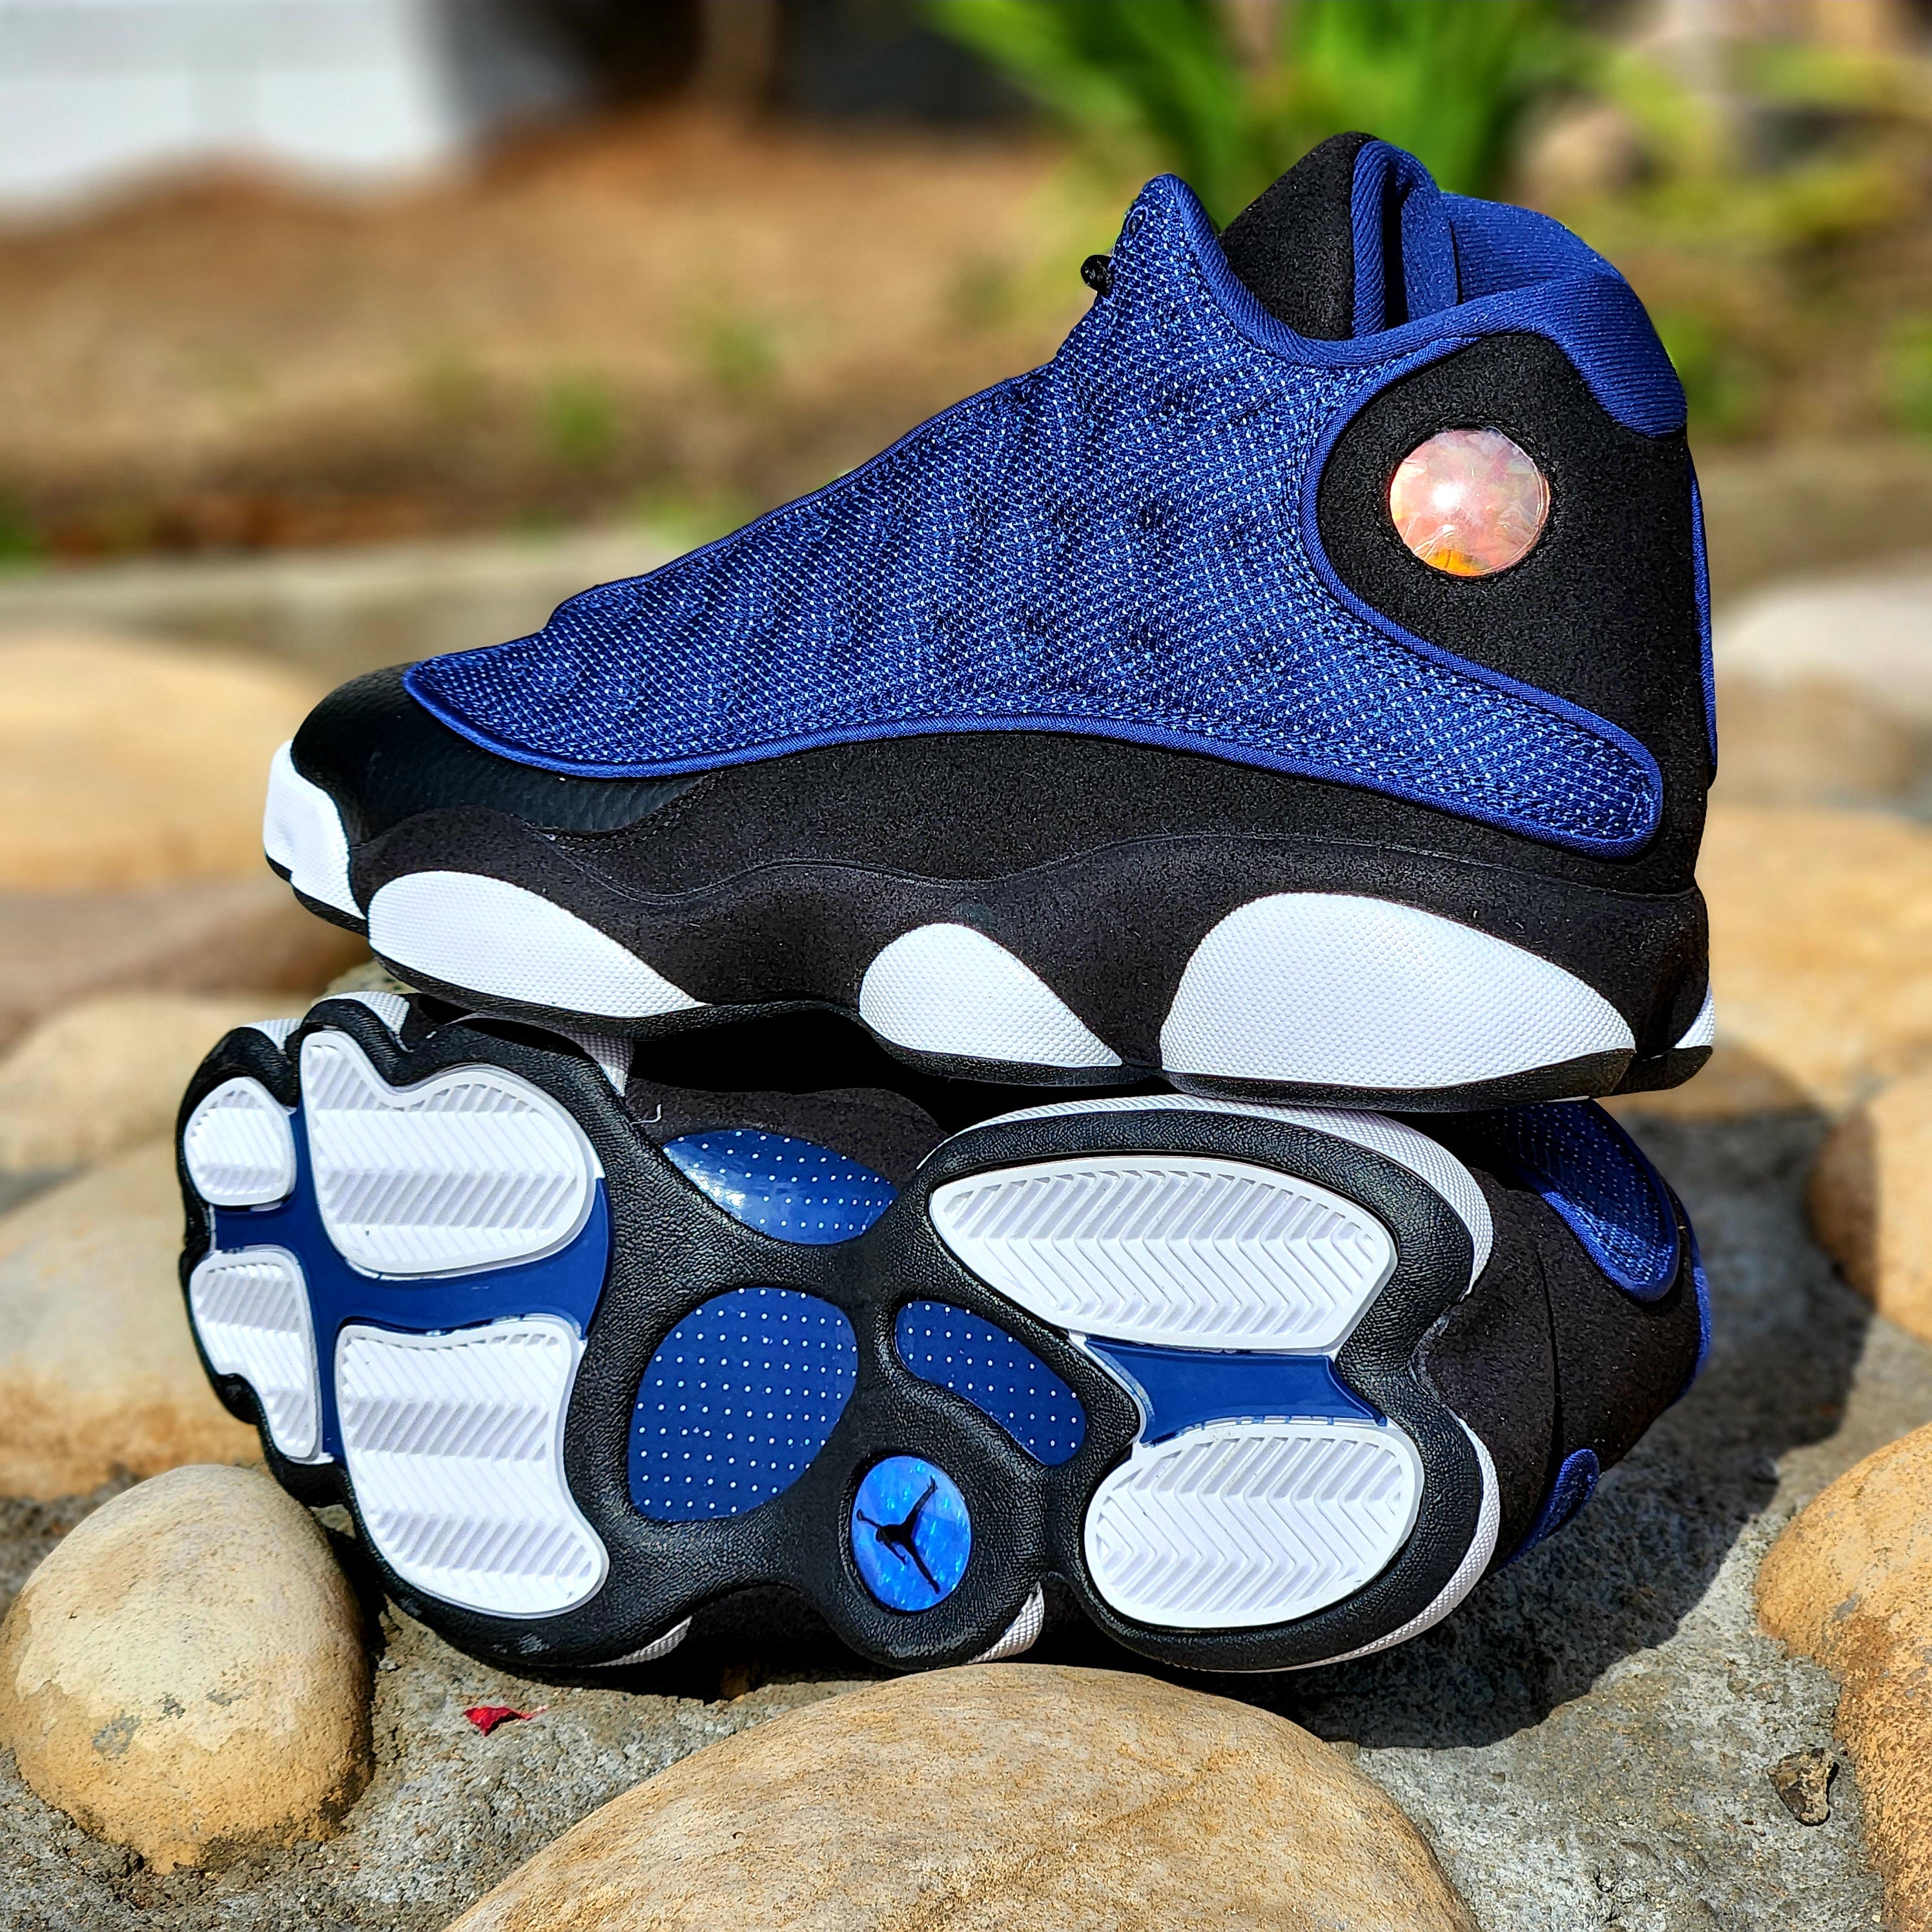 Jordan Air Jordan 13 Retro Brave Blue Mens Lifestyle Shoes Navy Blue Free S  DJ5982-400 – Shoe Palace